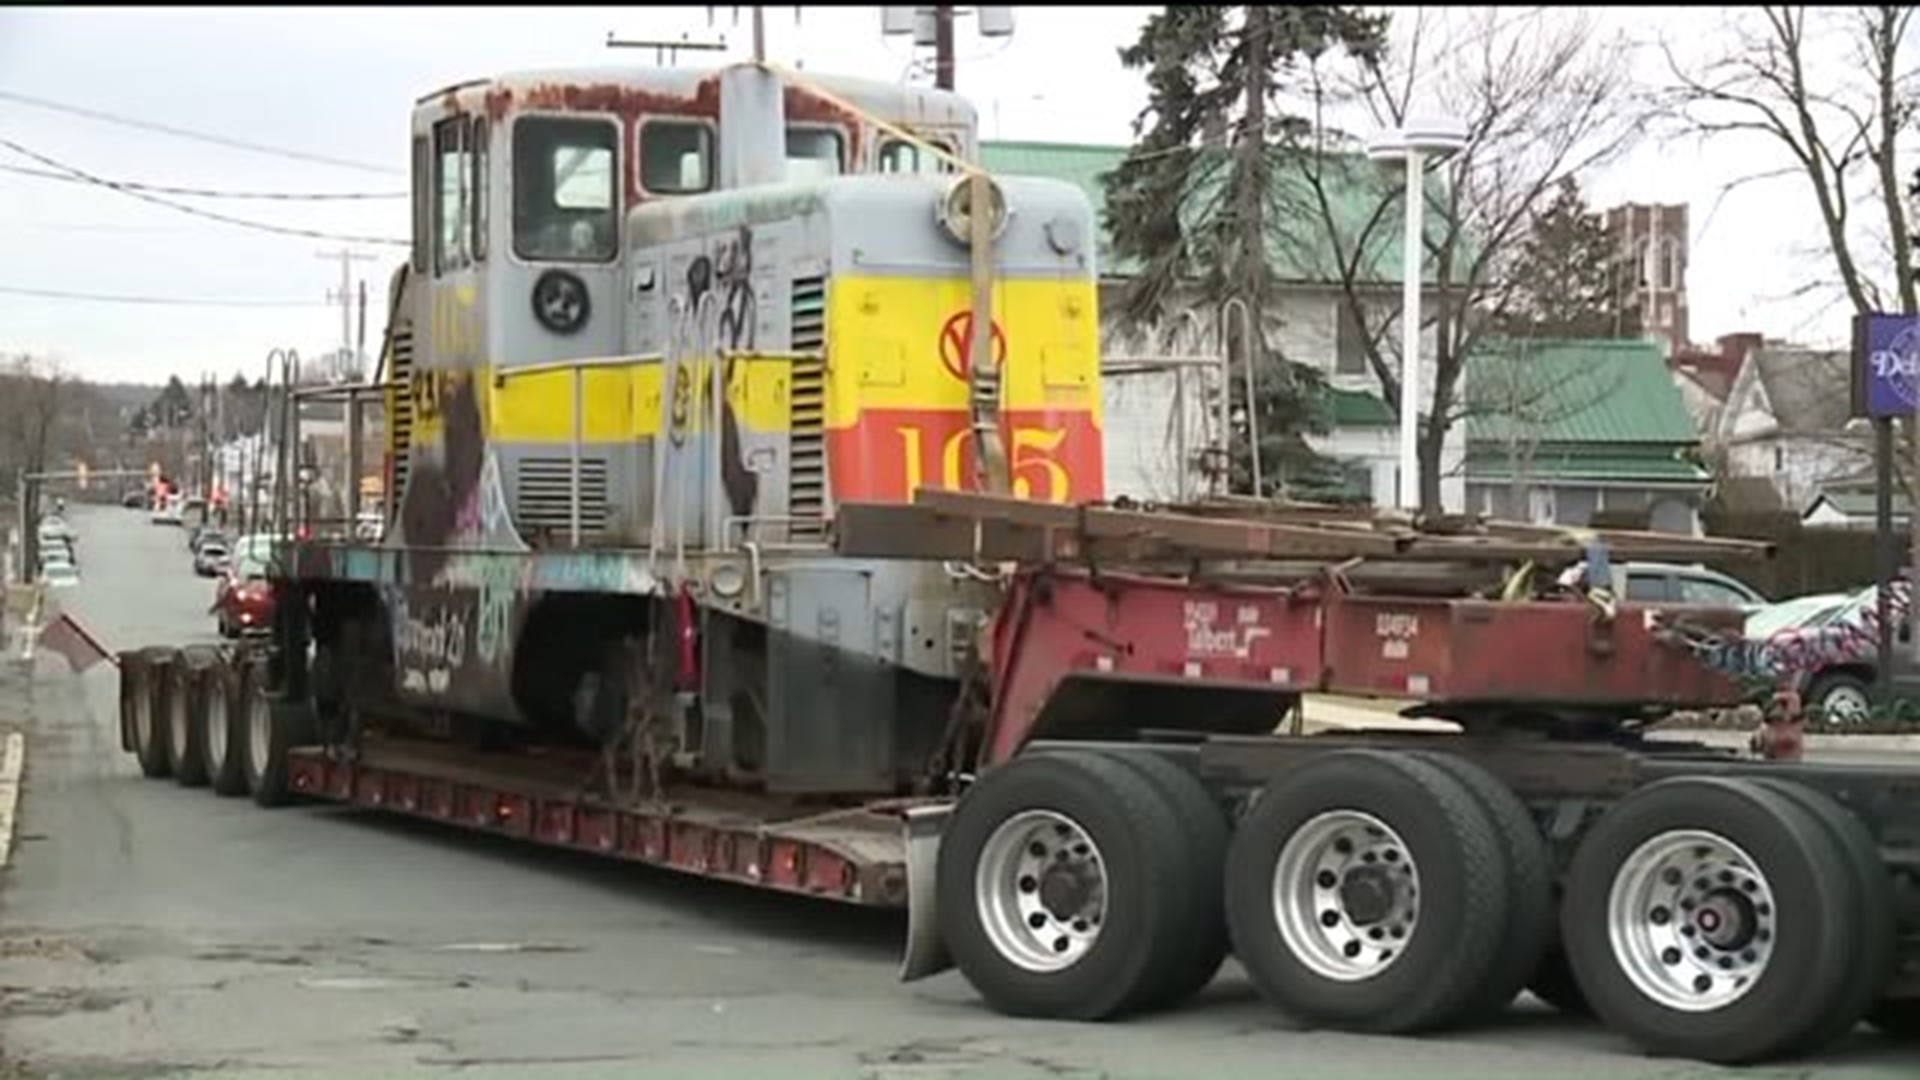 Rare Train Hauled through the Streets of Scranton, Ready to be Restored